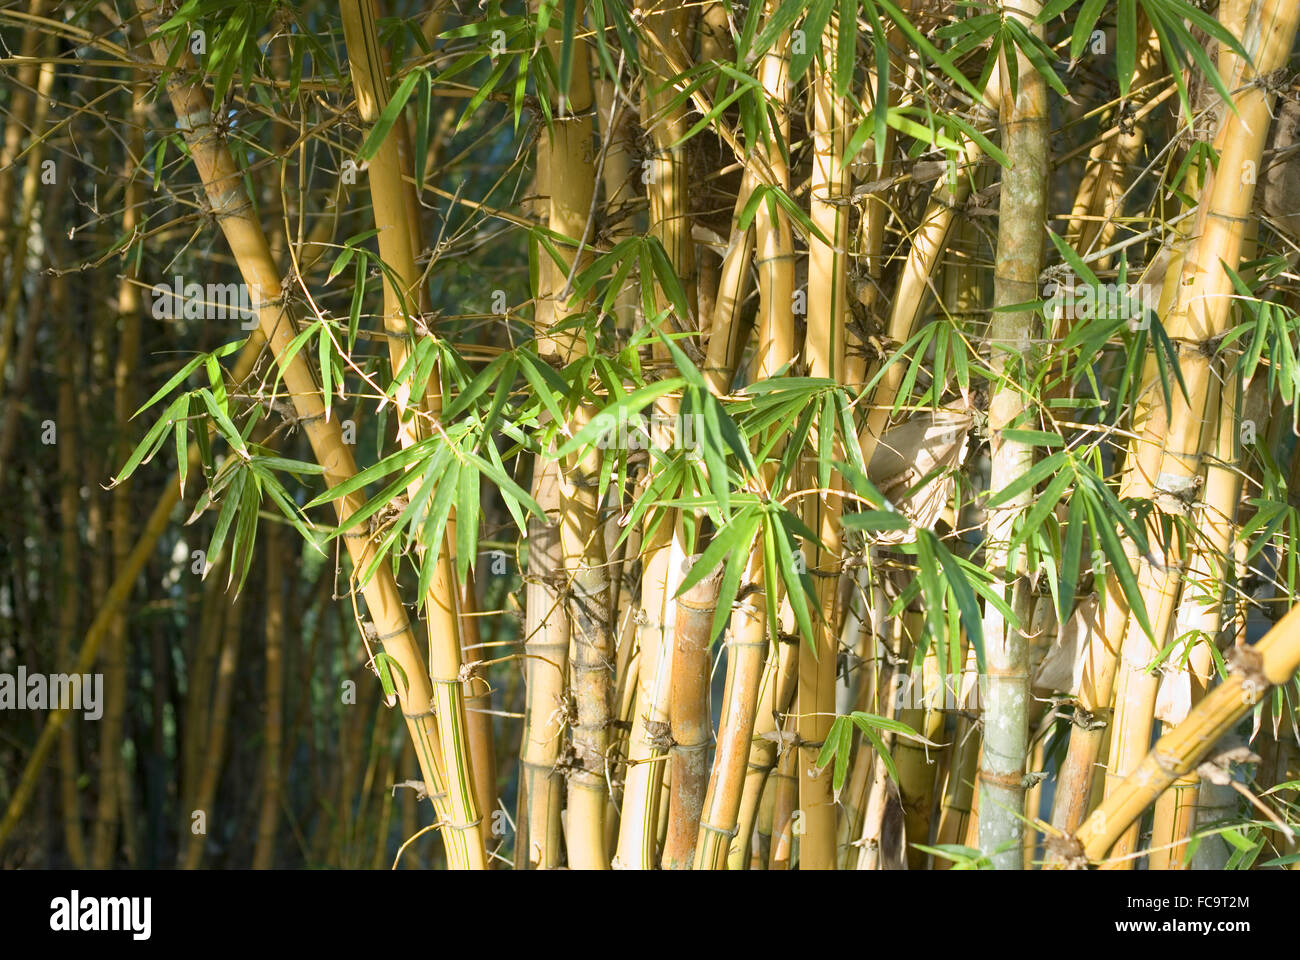 bamboo cane Stock Photo